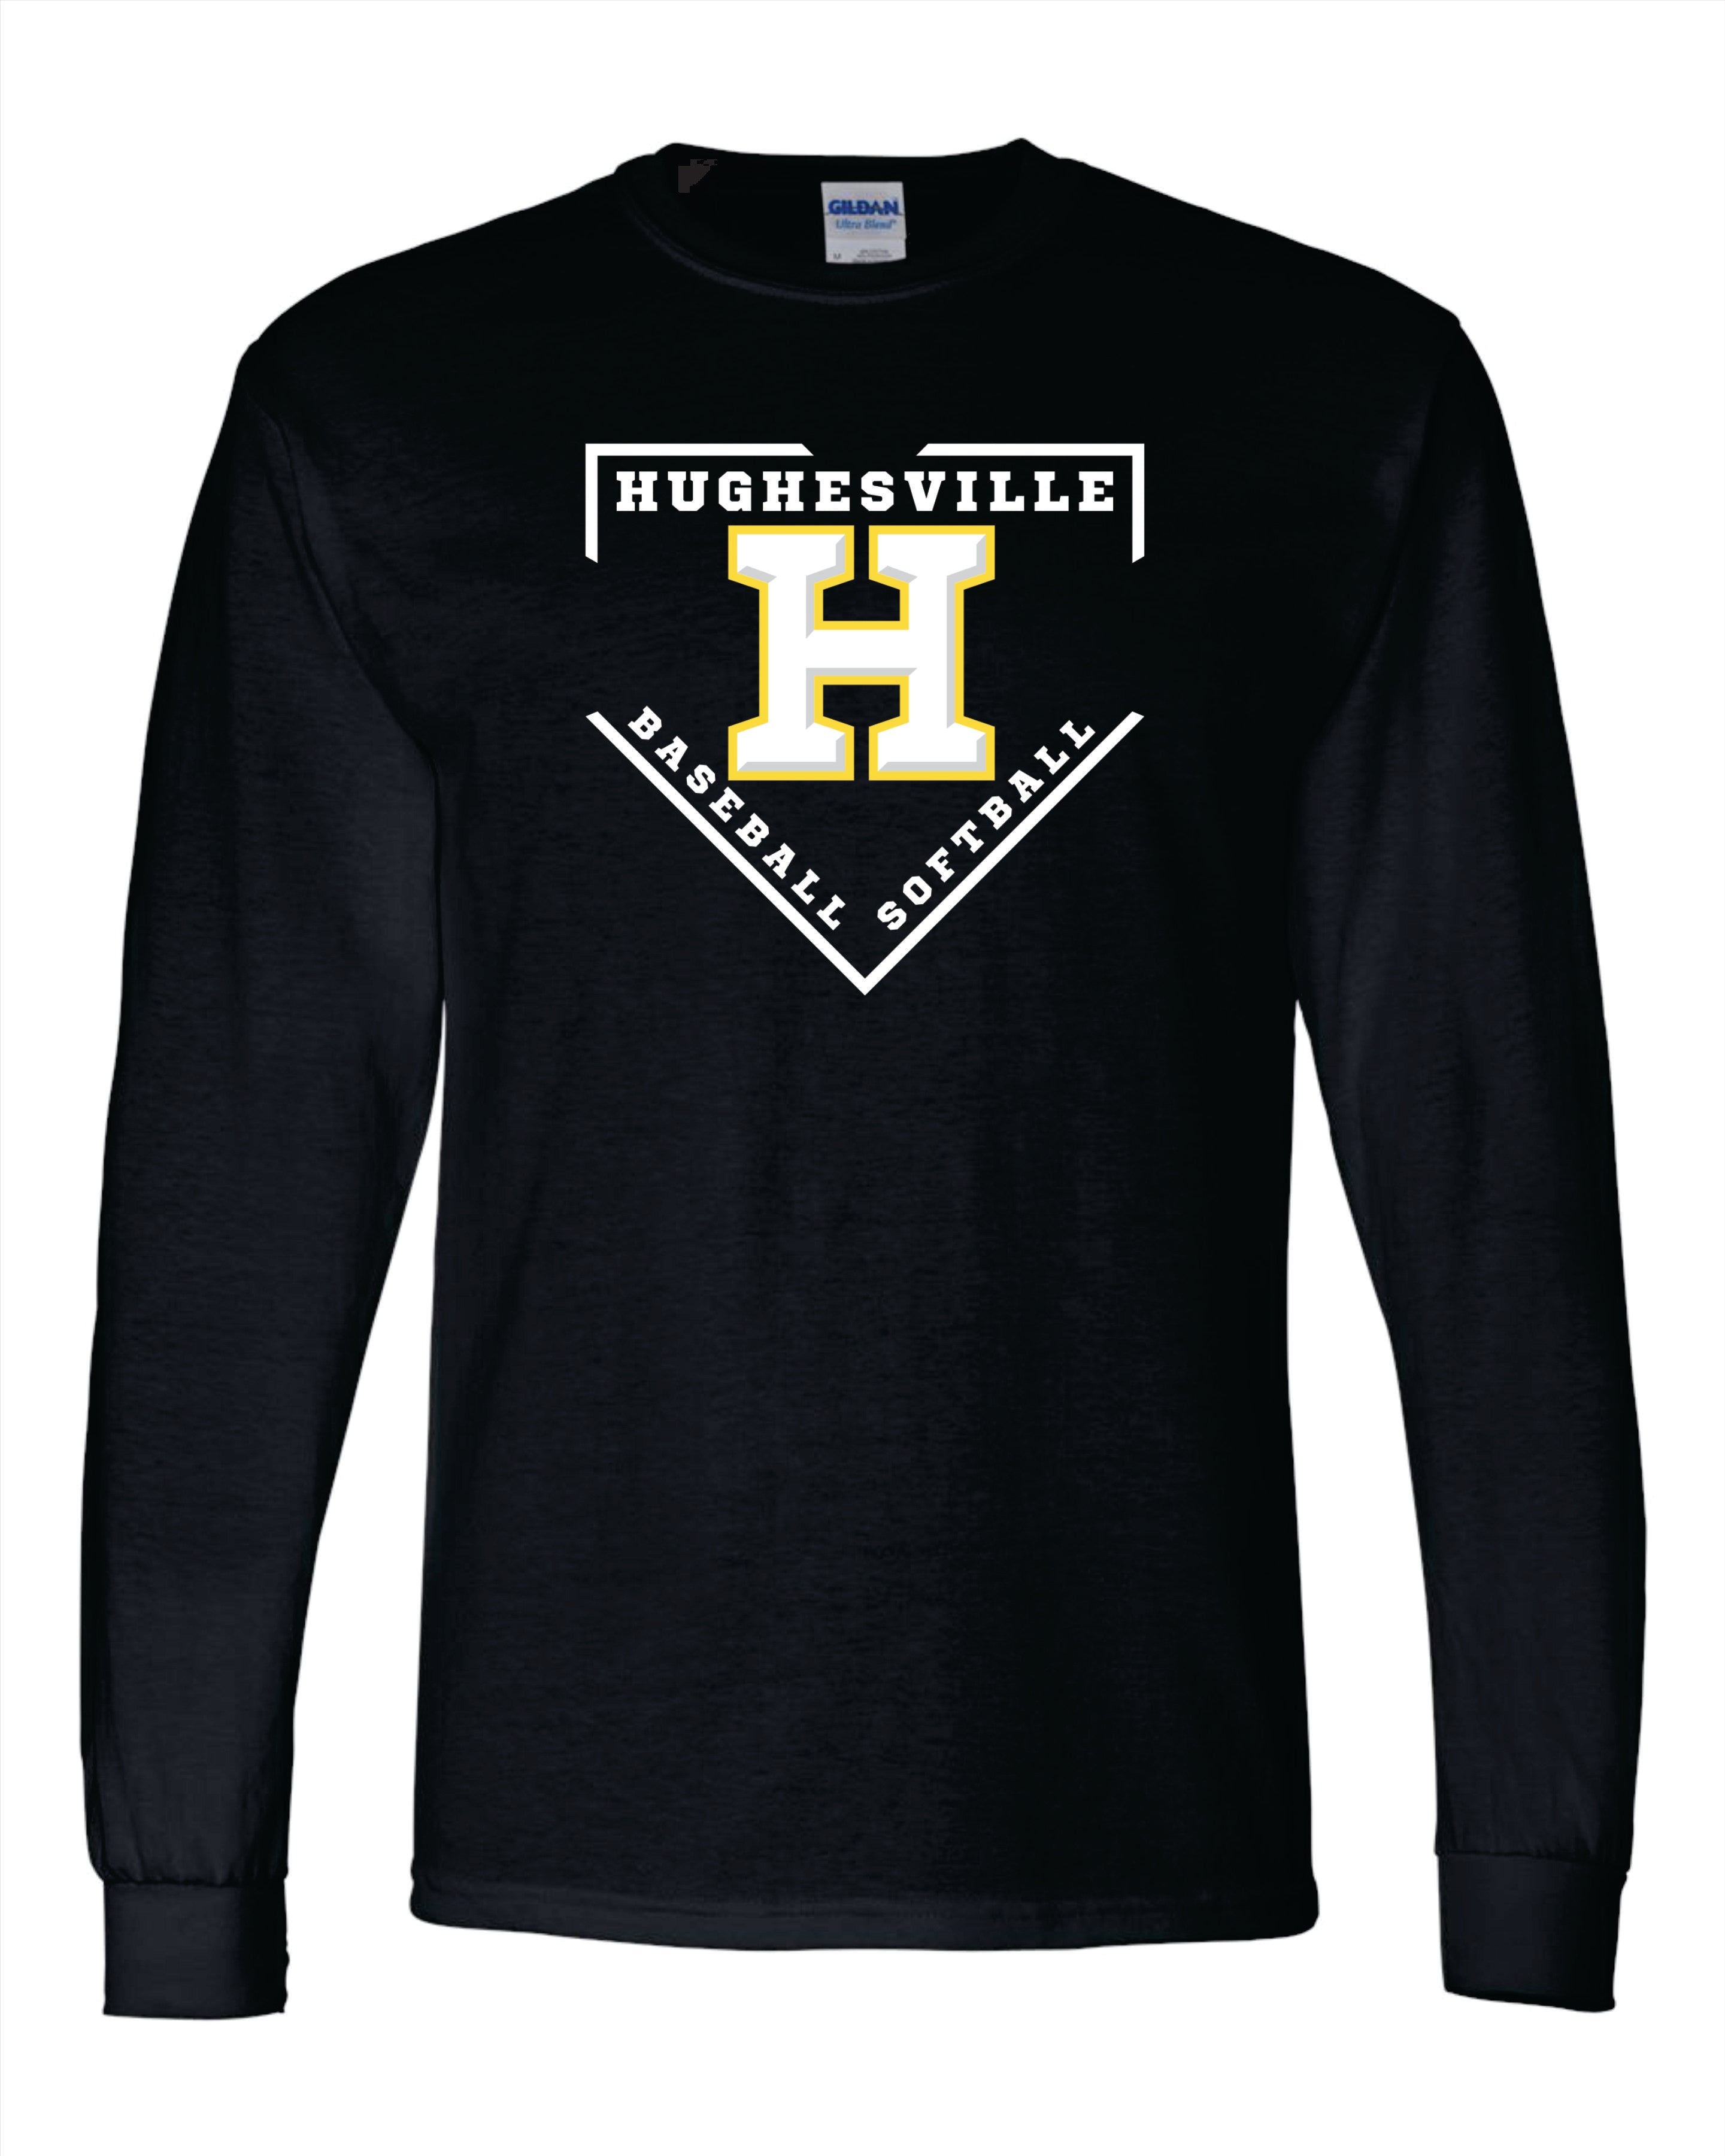 Hughesville LL 50/50 Long Sleeve T-Shirts YOUTH